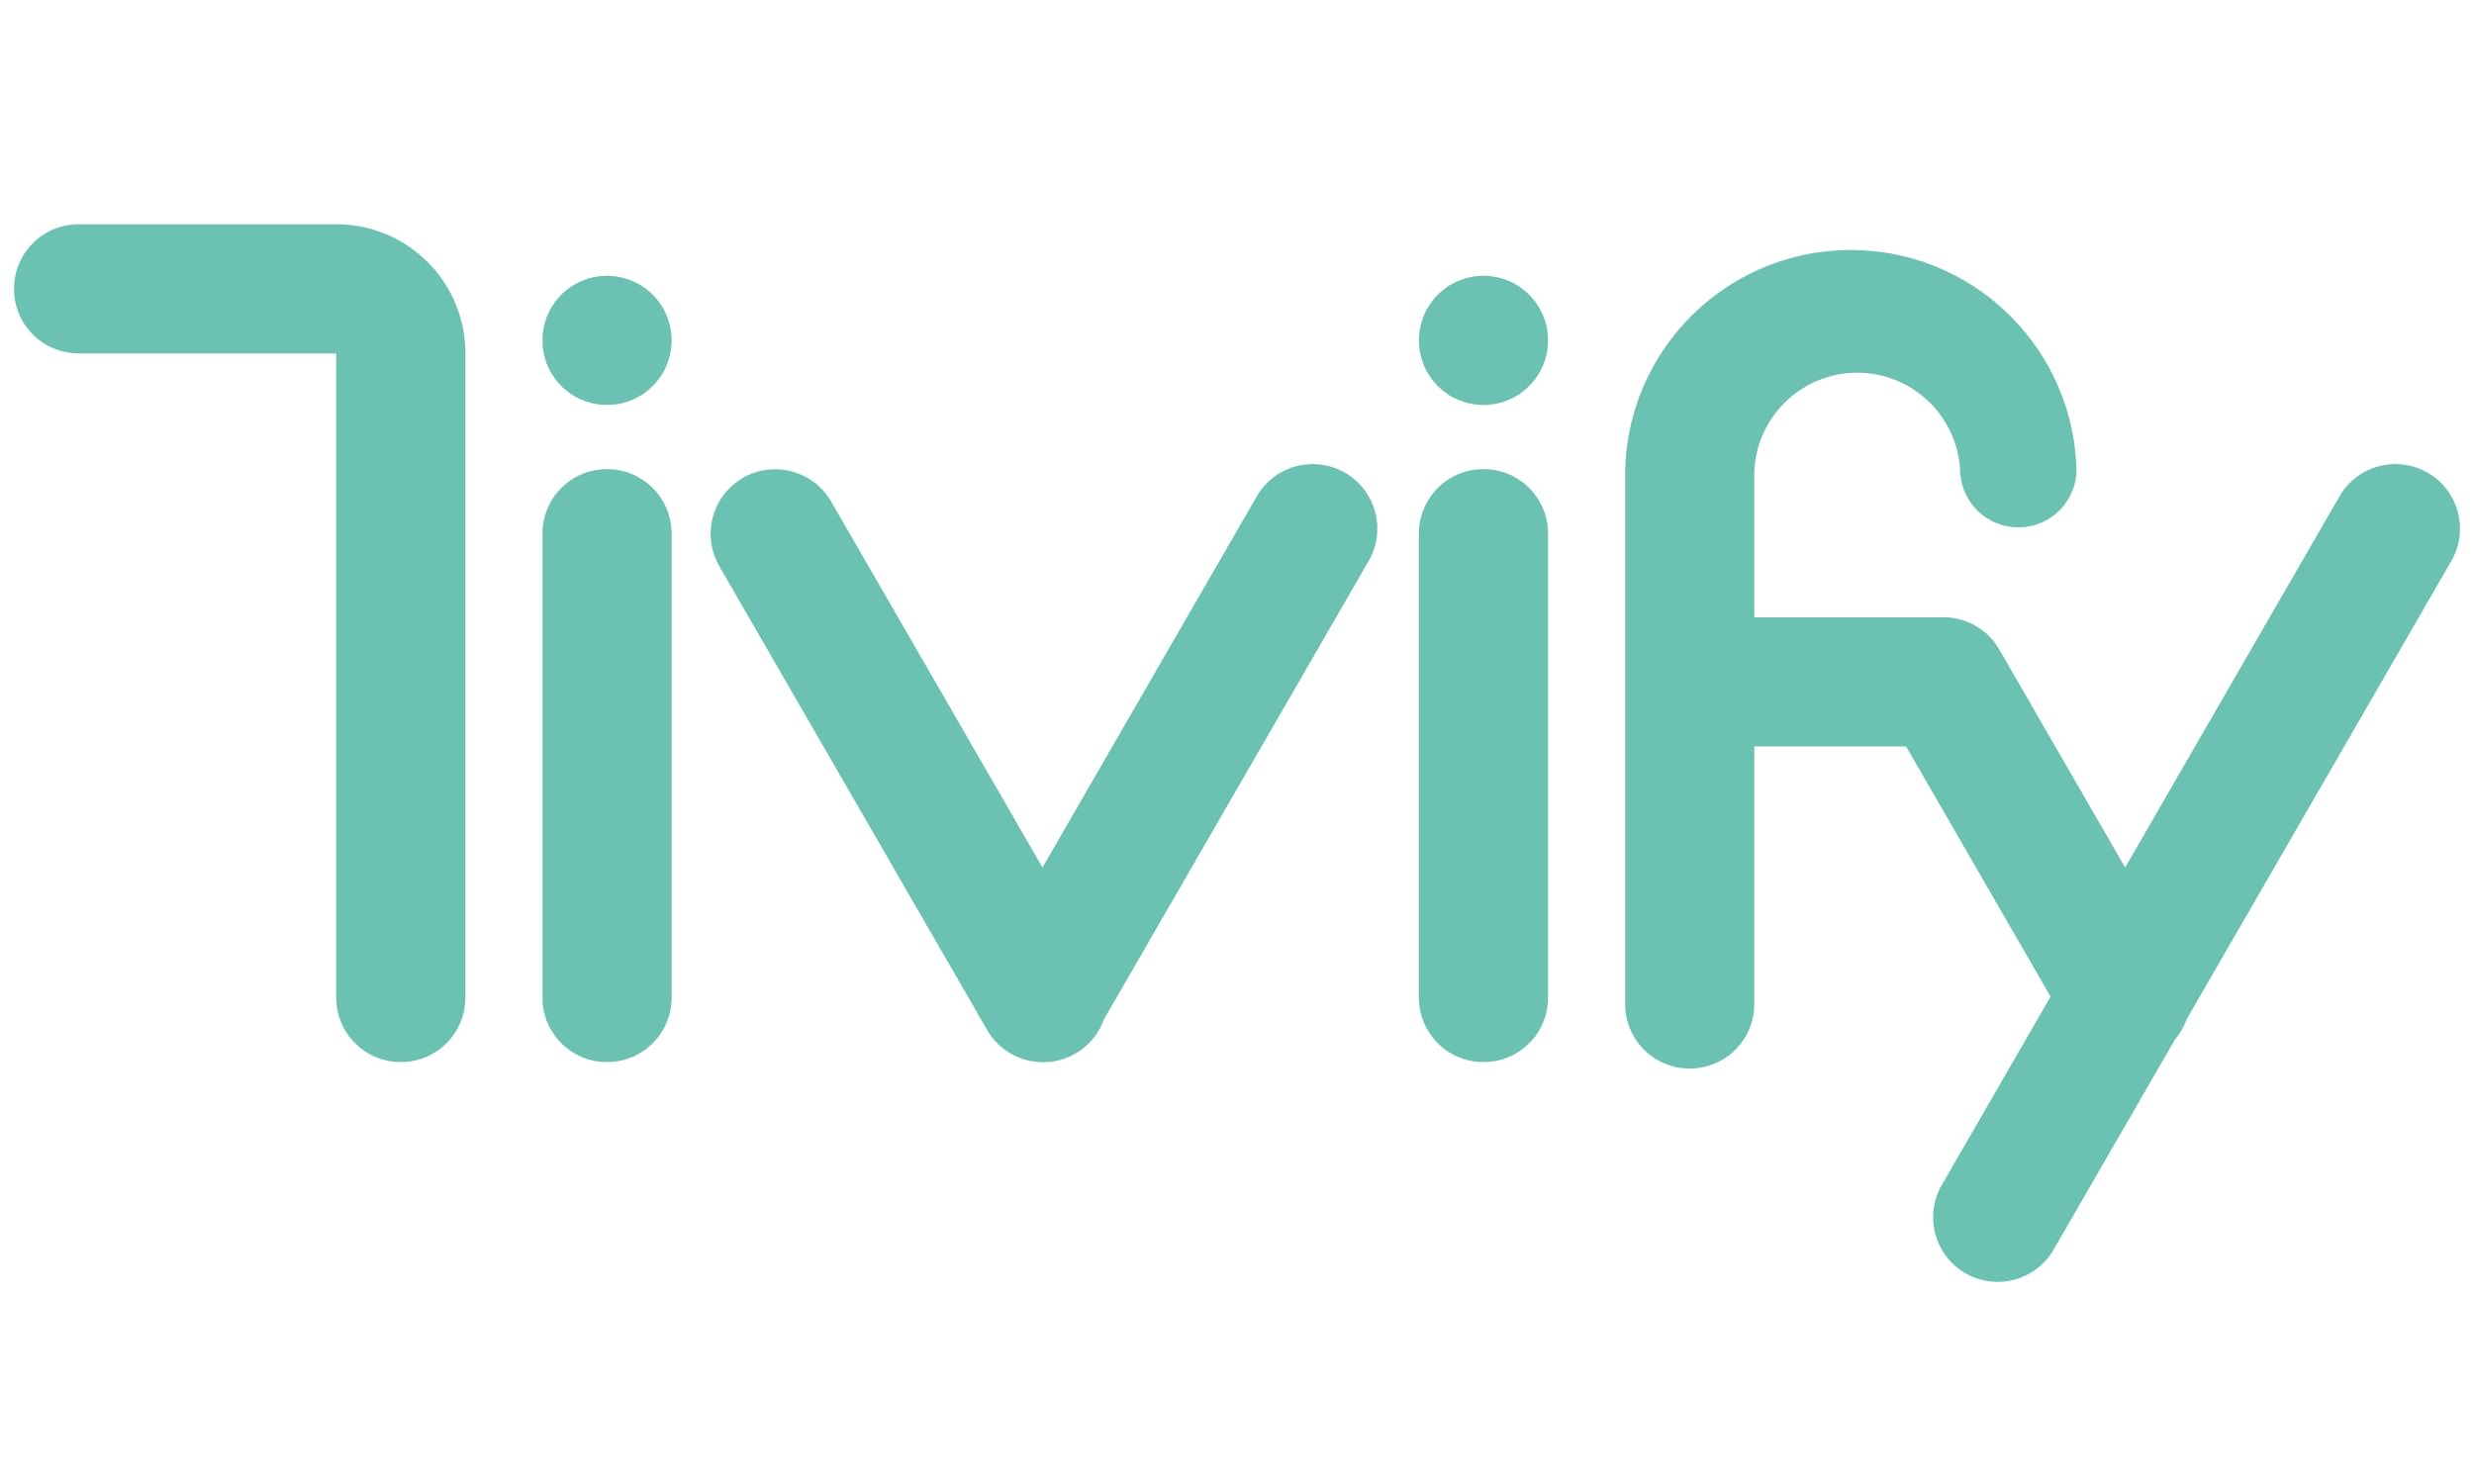 Logo Tivify